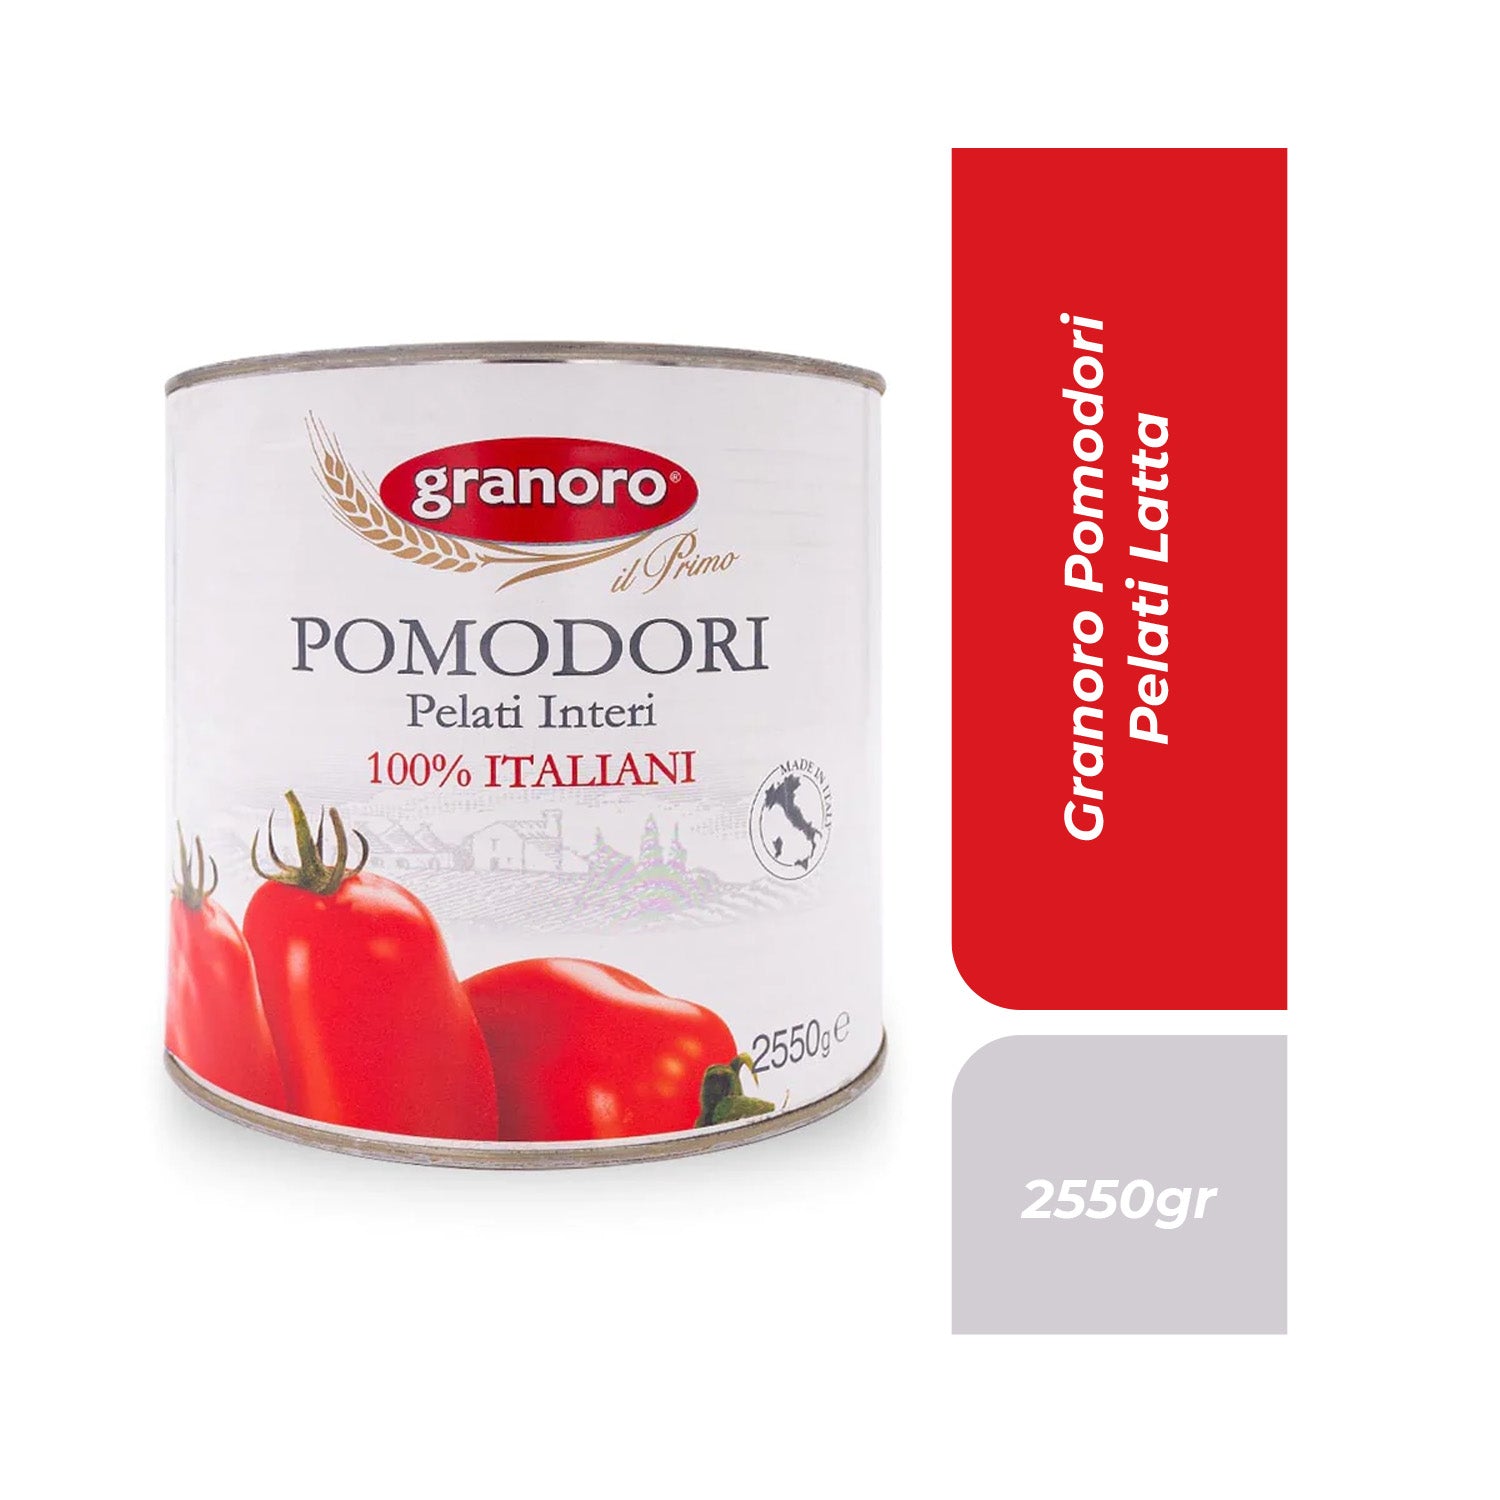 Pomodori Pelati Interi 800g, Shop Granoro